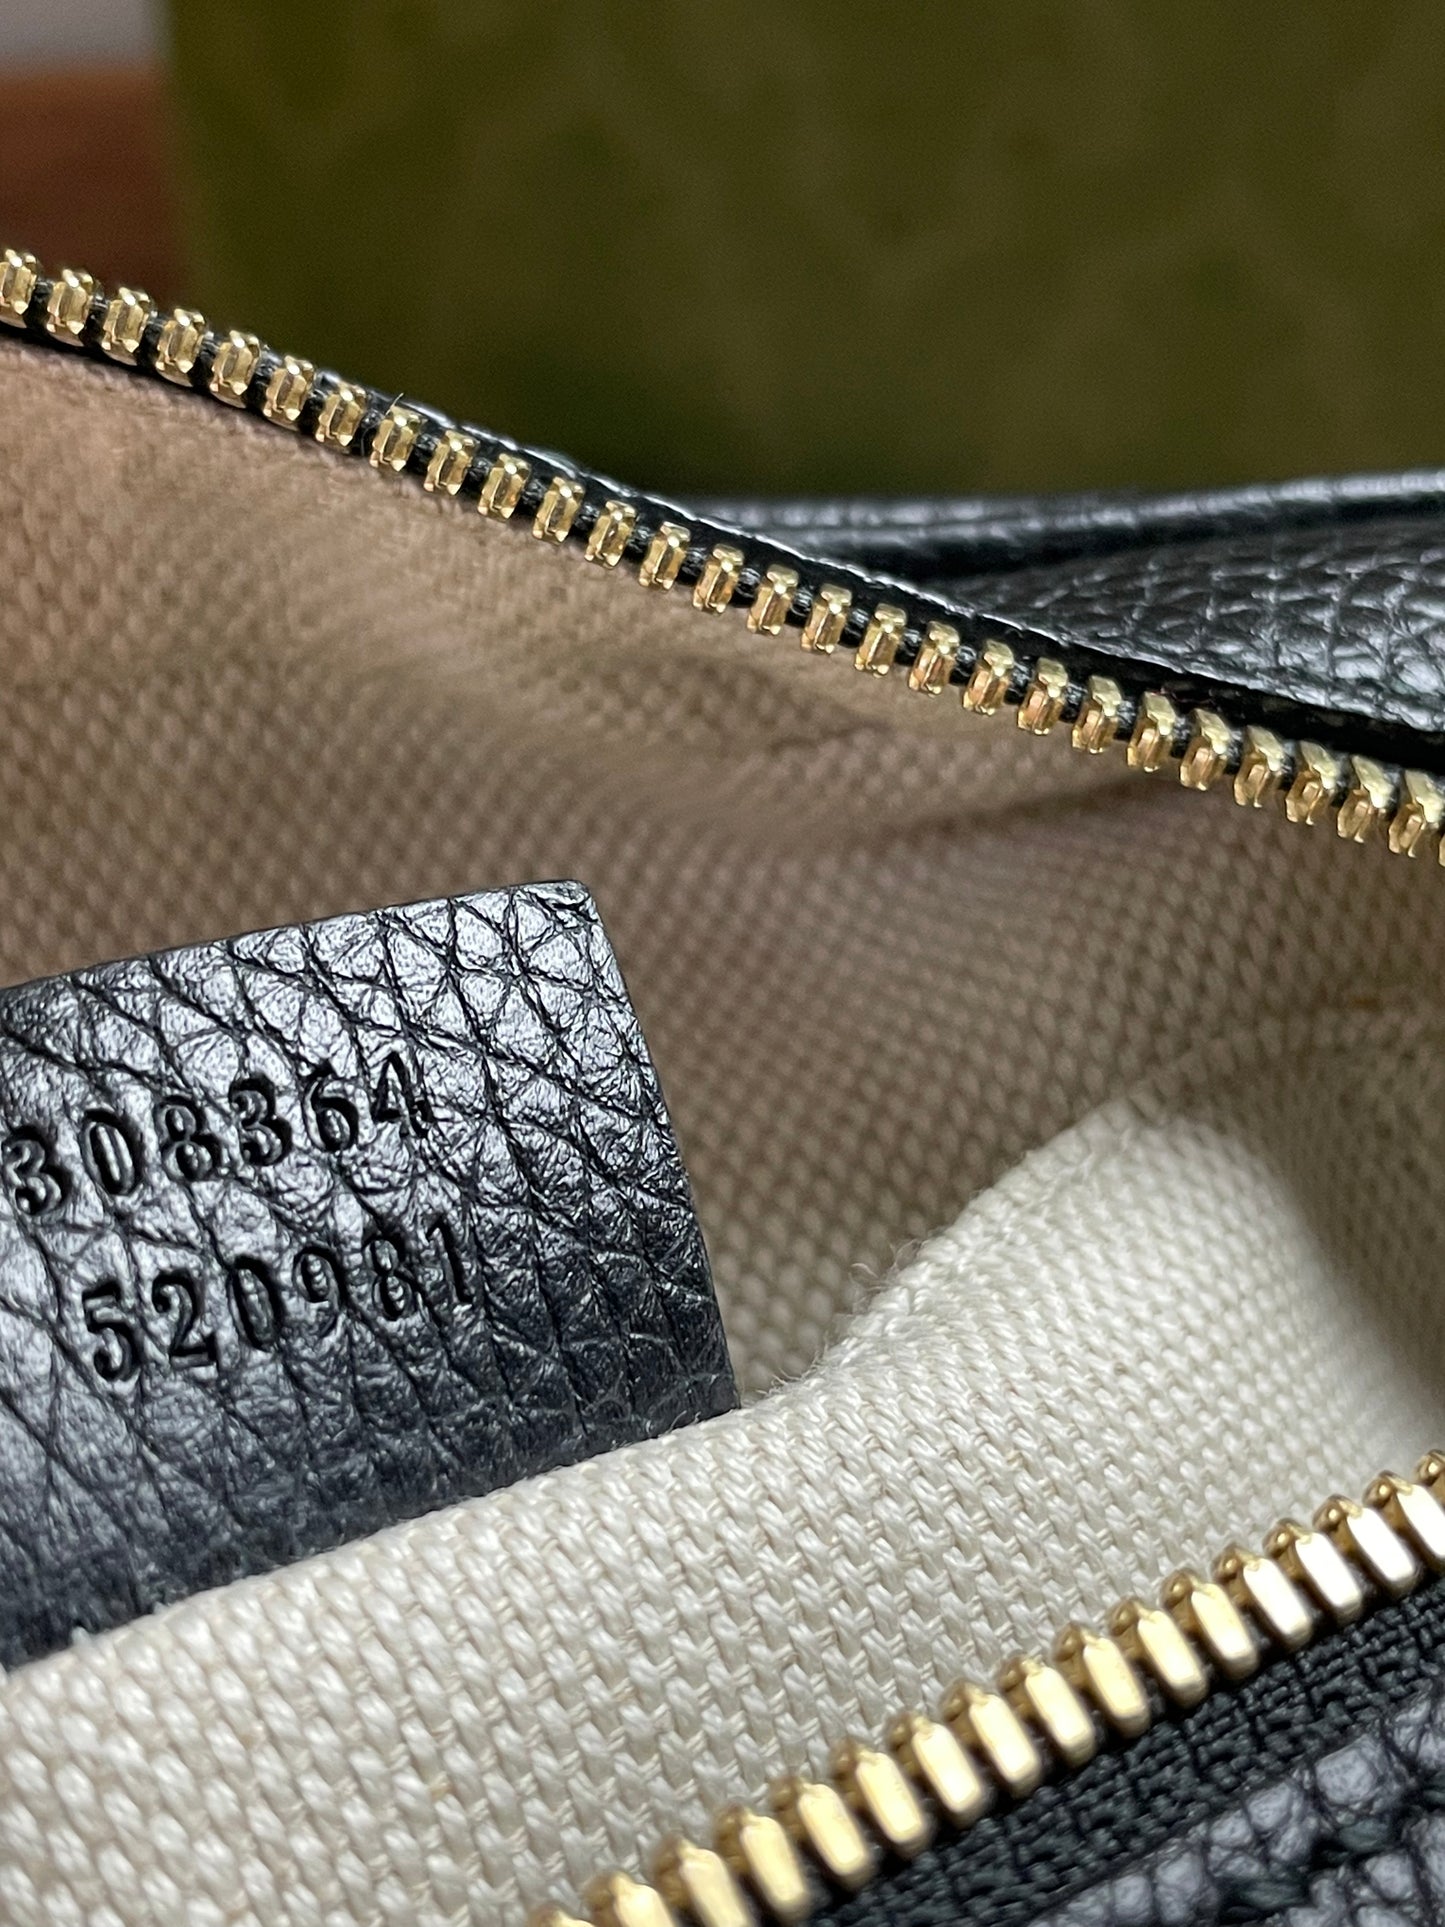 Authentic Gucci Soho Disco bag in Black